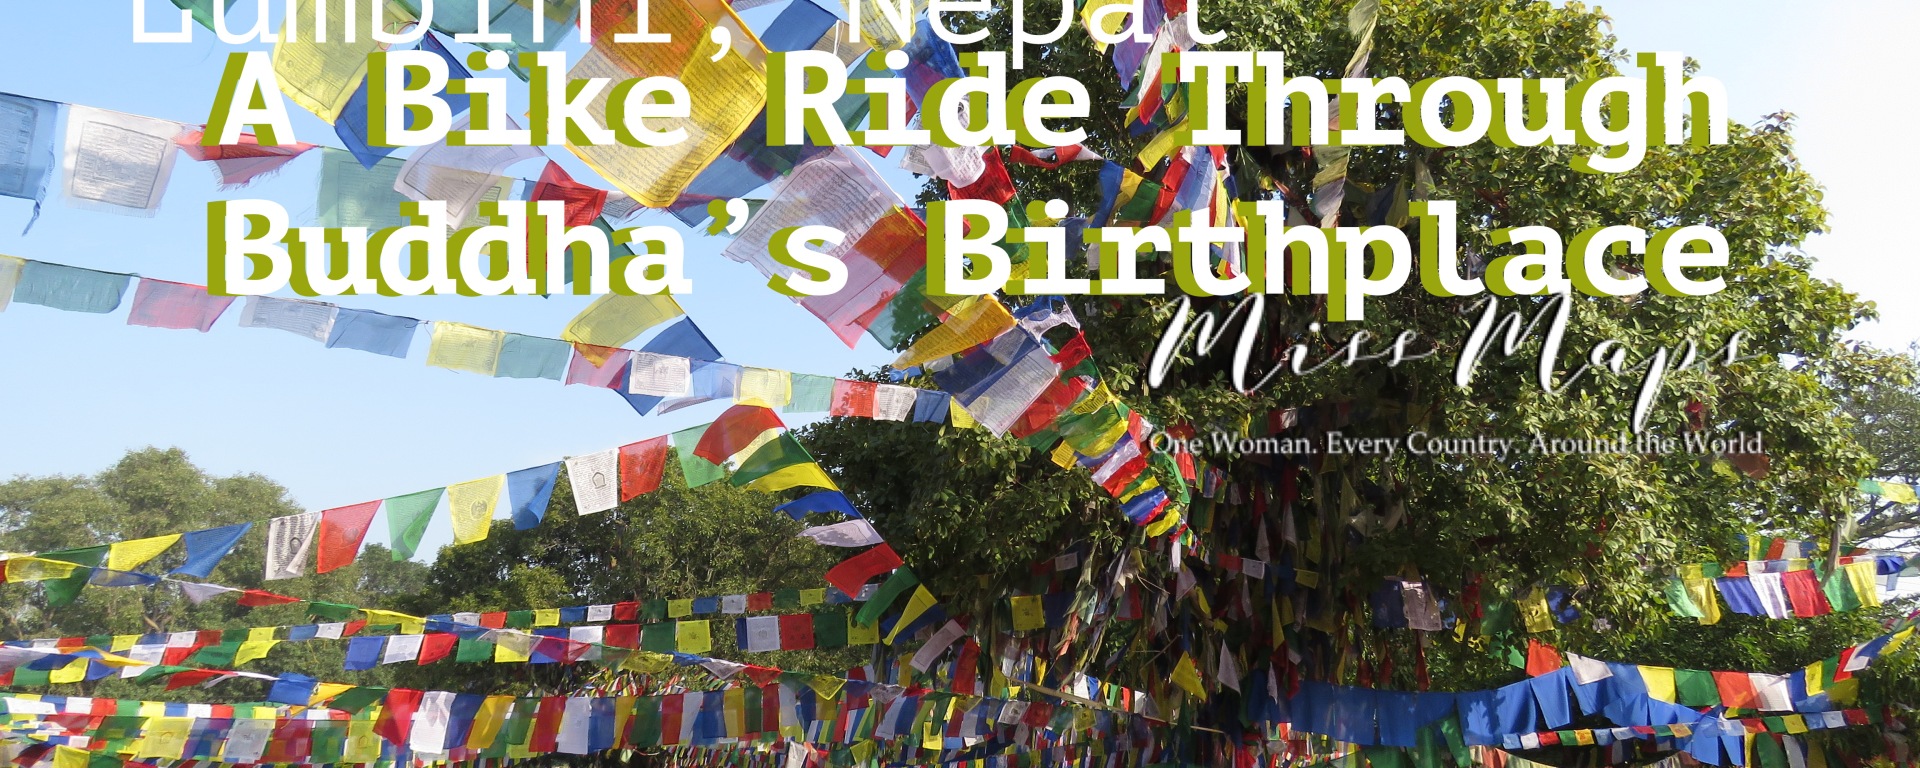 A Bike Ride Through Buddha's Birthplace - Lumbini Nepal - by Anika Mikkelson - Miss Maps - www.MissMaps.com